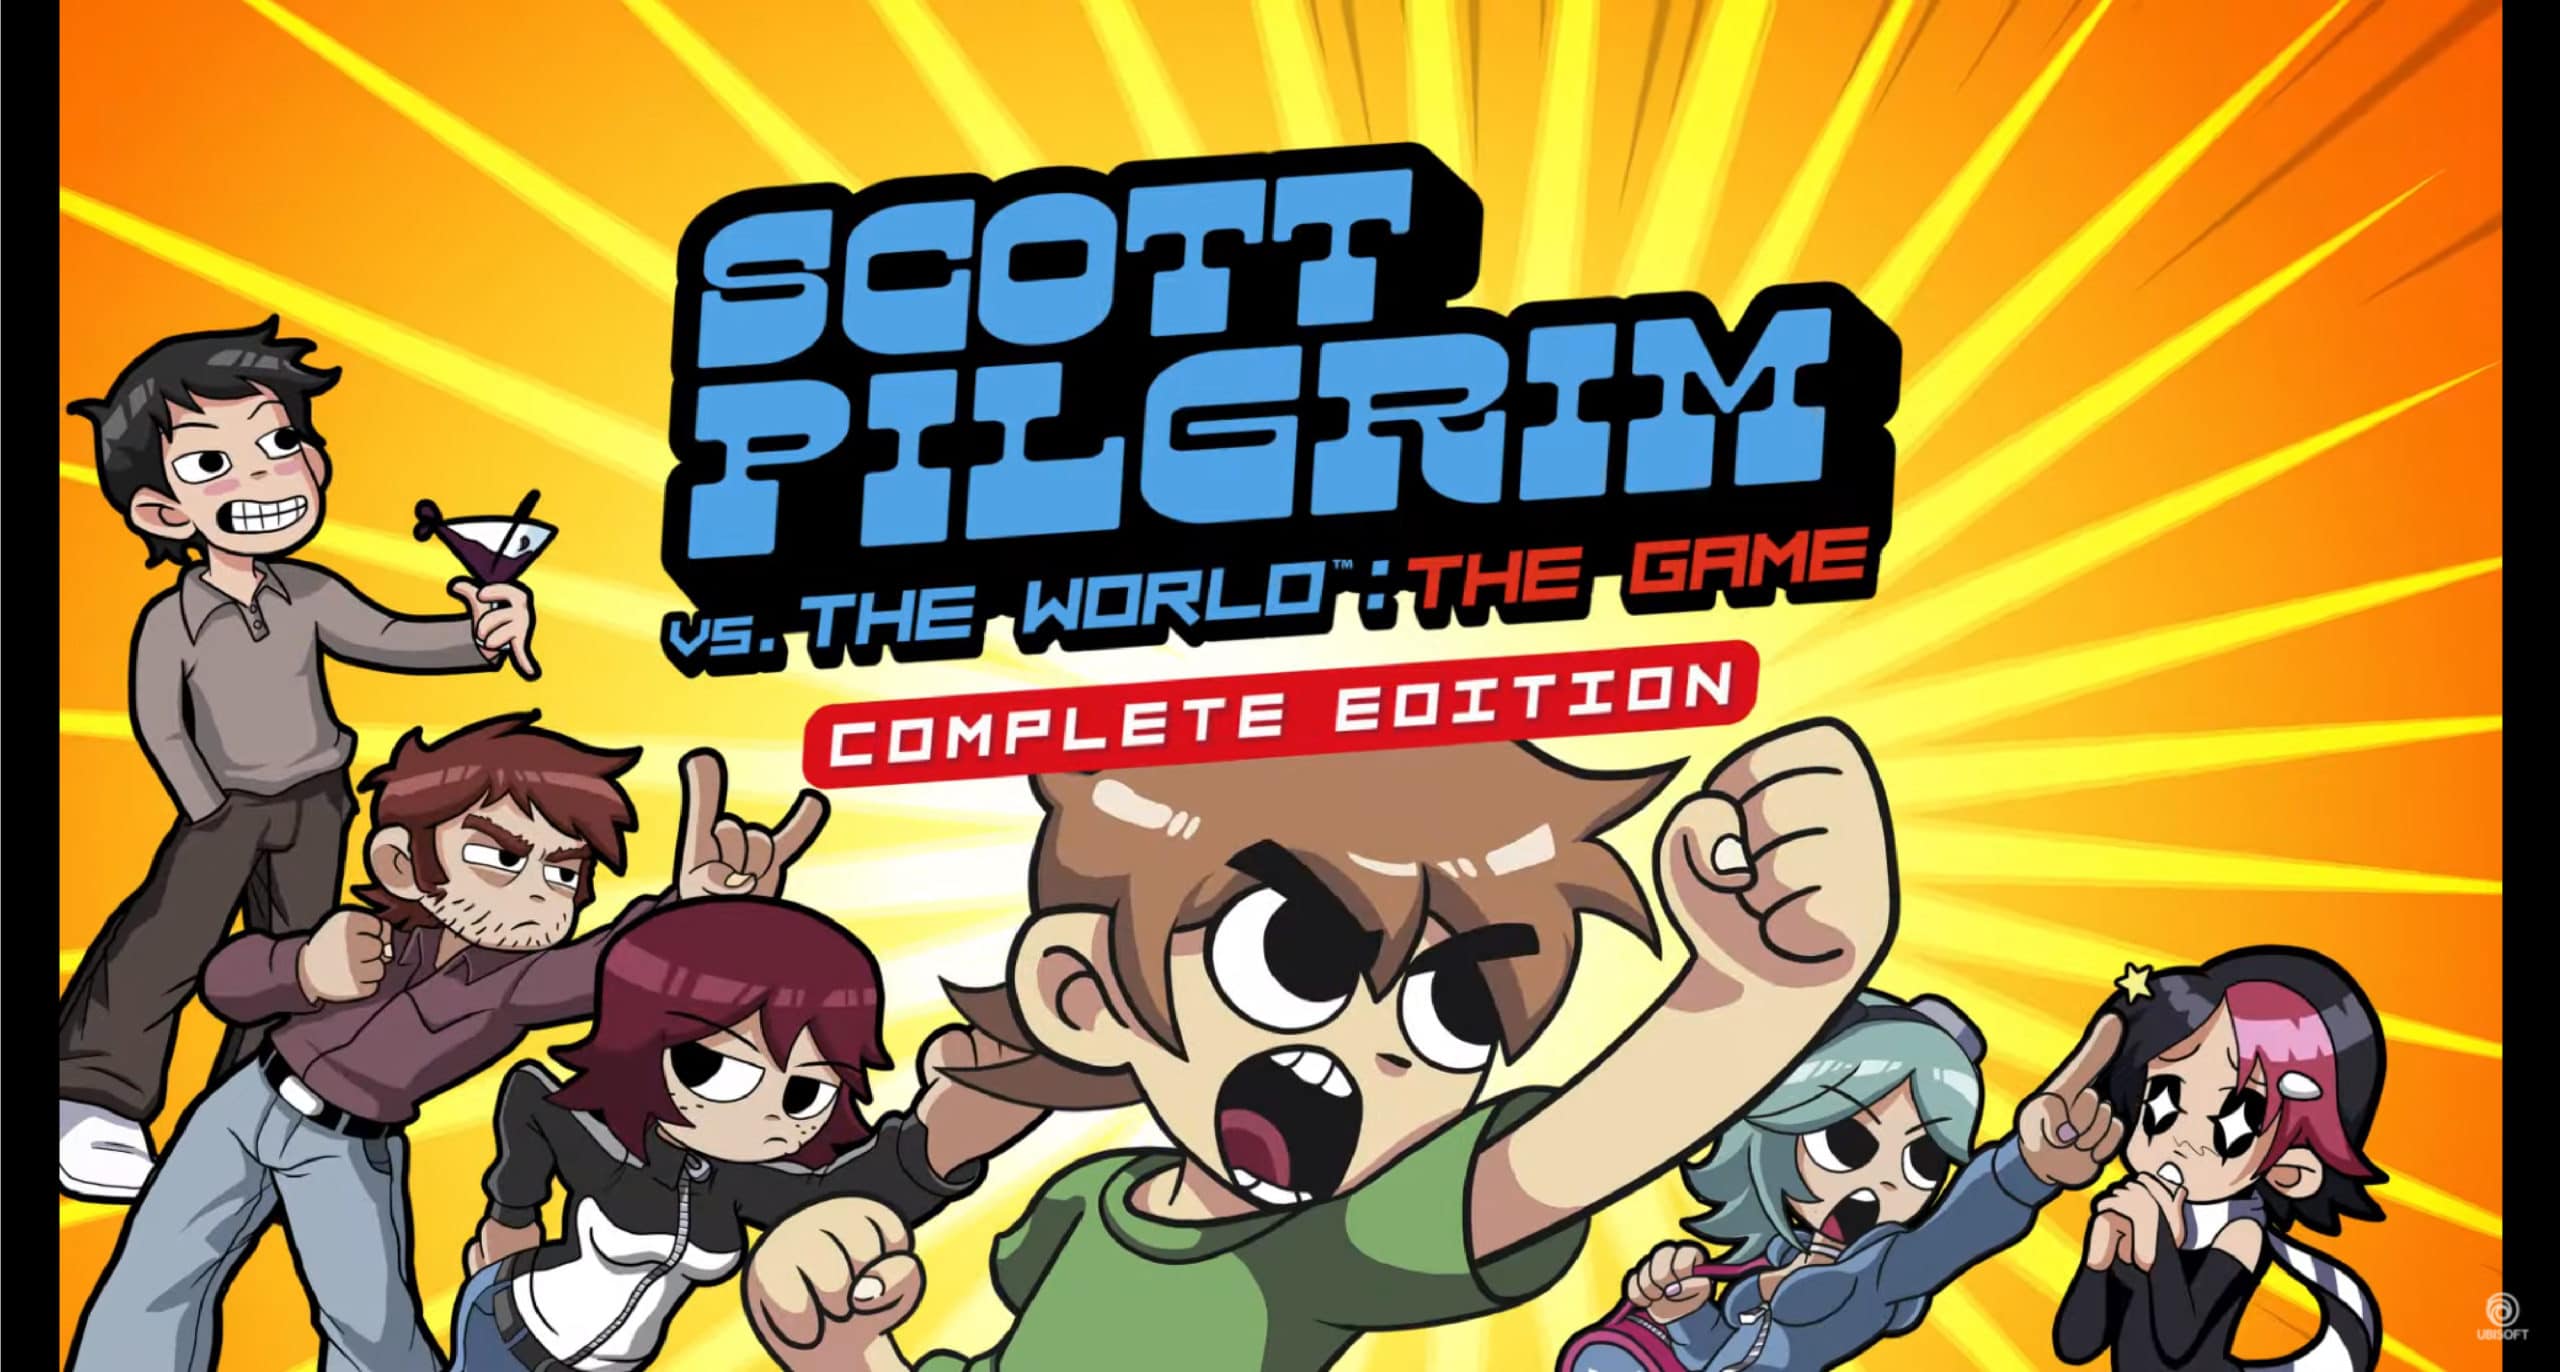 Ubisoft revela Scott Pilgrim vs. The World: The Game Complete Edition